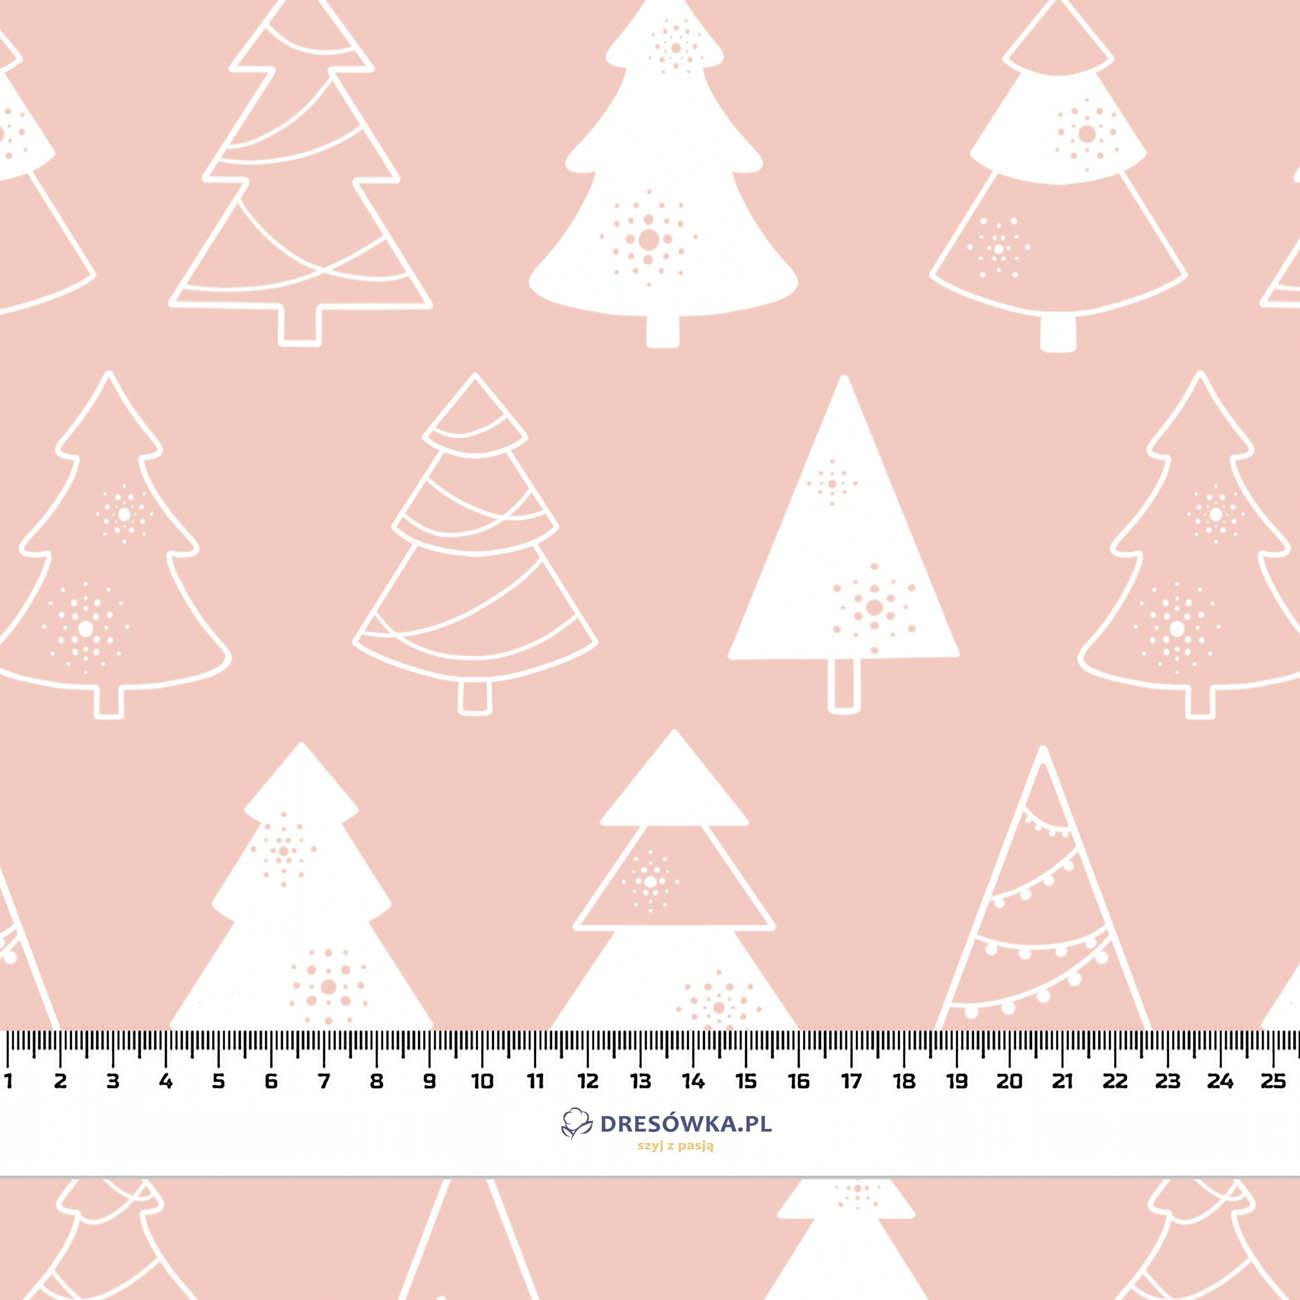 GLAZED CHRISTMAS TREES (CHRISTMAS GINGERBREAD) / dusky pink - light brushed knitwear